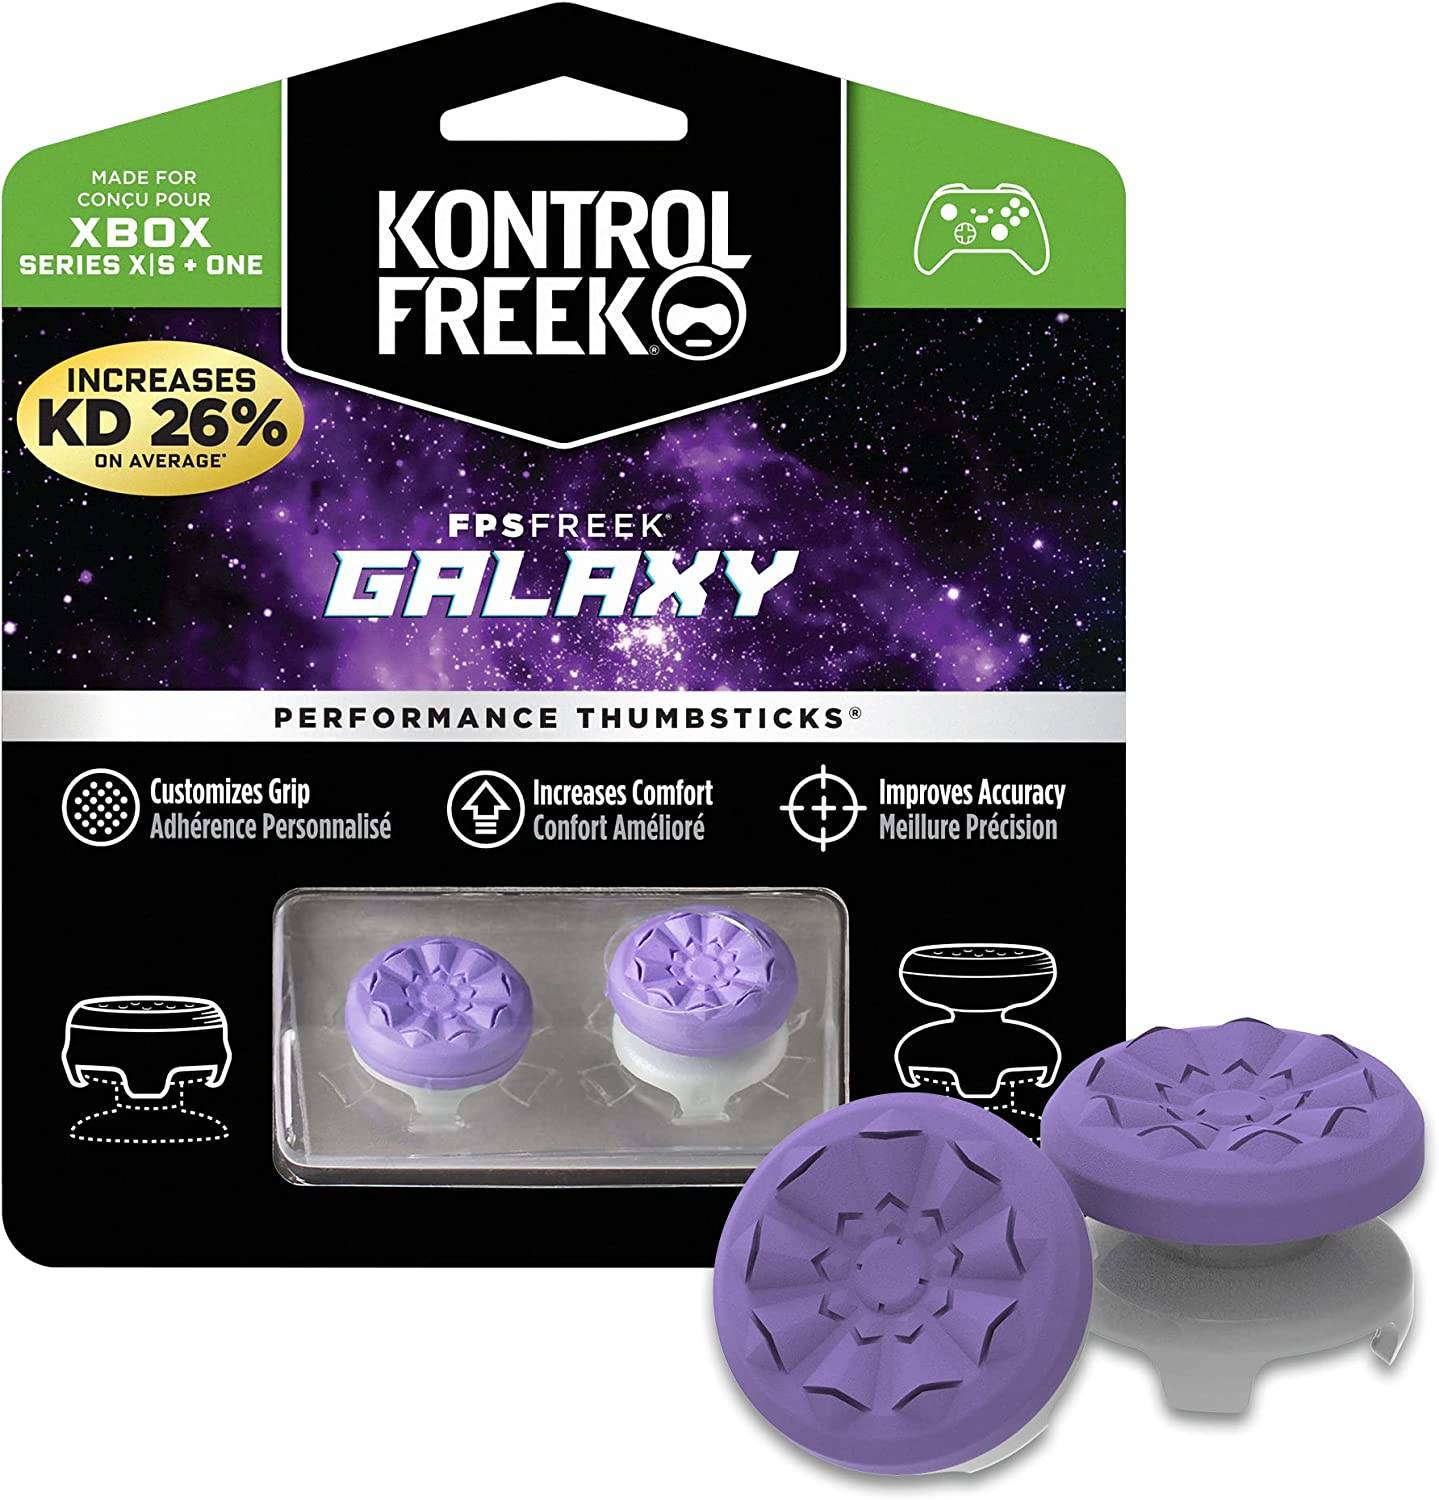 KontrolFreek FPS Freek Galaxy Performance for One X Thumbsticks and Xbox Invastor Series Xbox 